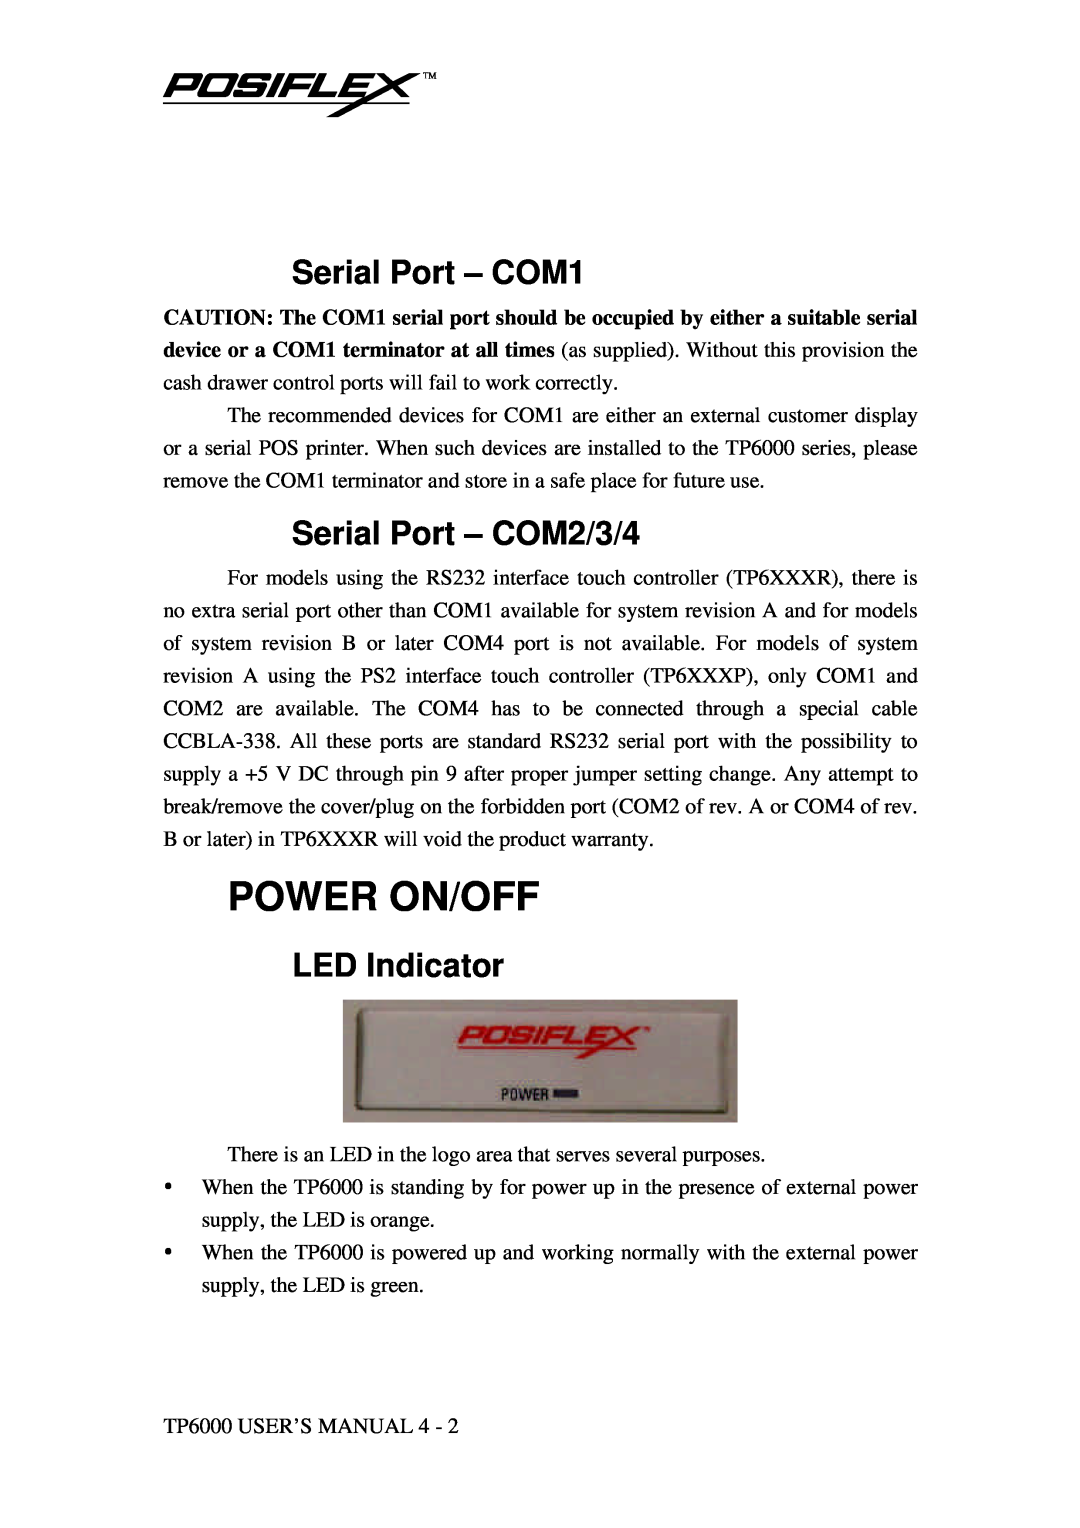 Mustek TP-6000 user manual Power On/Off, Serial Port - COM1, Serial Port - COM2/3/4, LED Indicator 